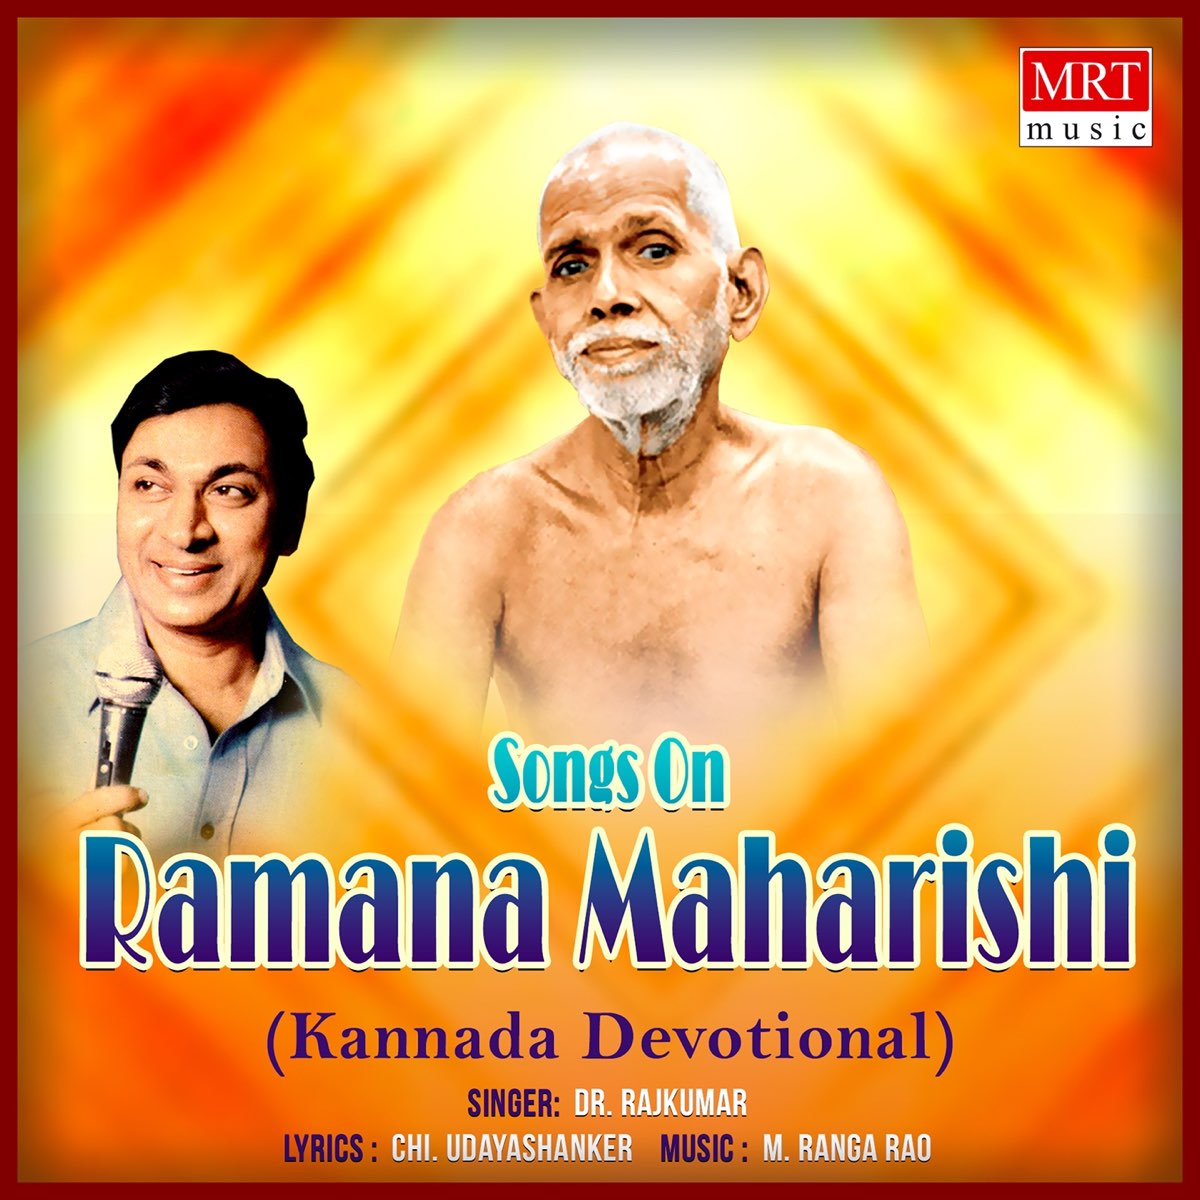 Songs On Ramana Maharishi - Album by Dr. Rajkumar - Apple Music